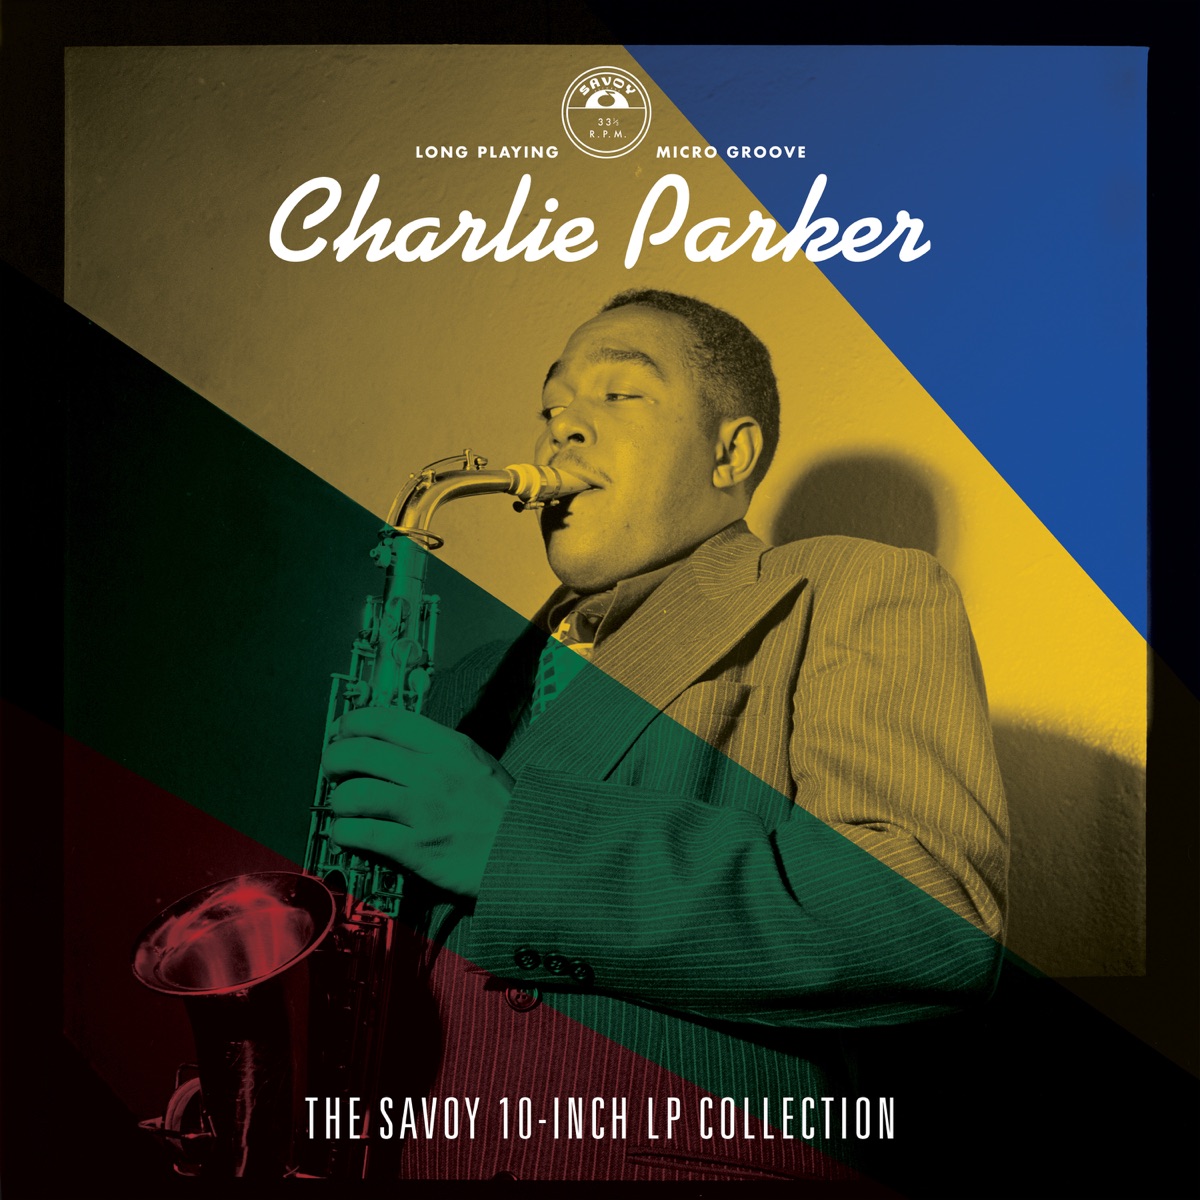 Charlie Parker - Album by Charlie Parker - Apple Music